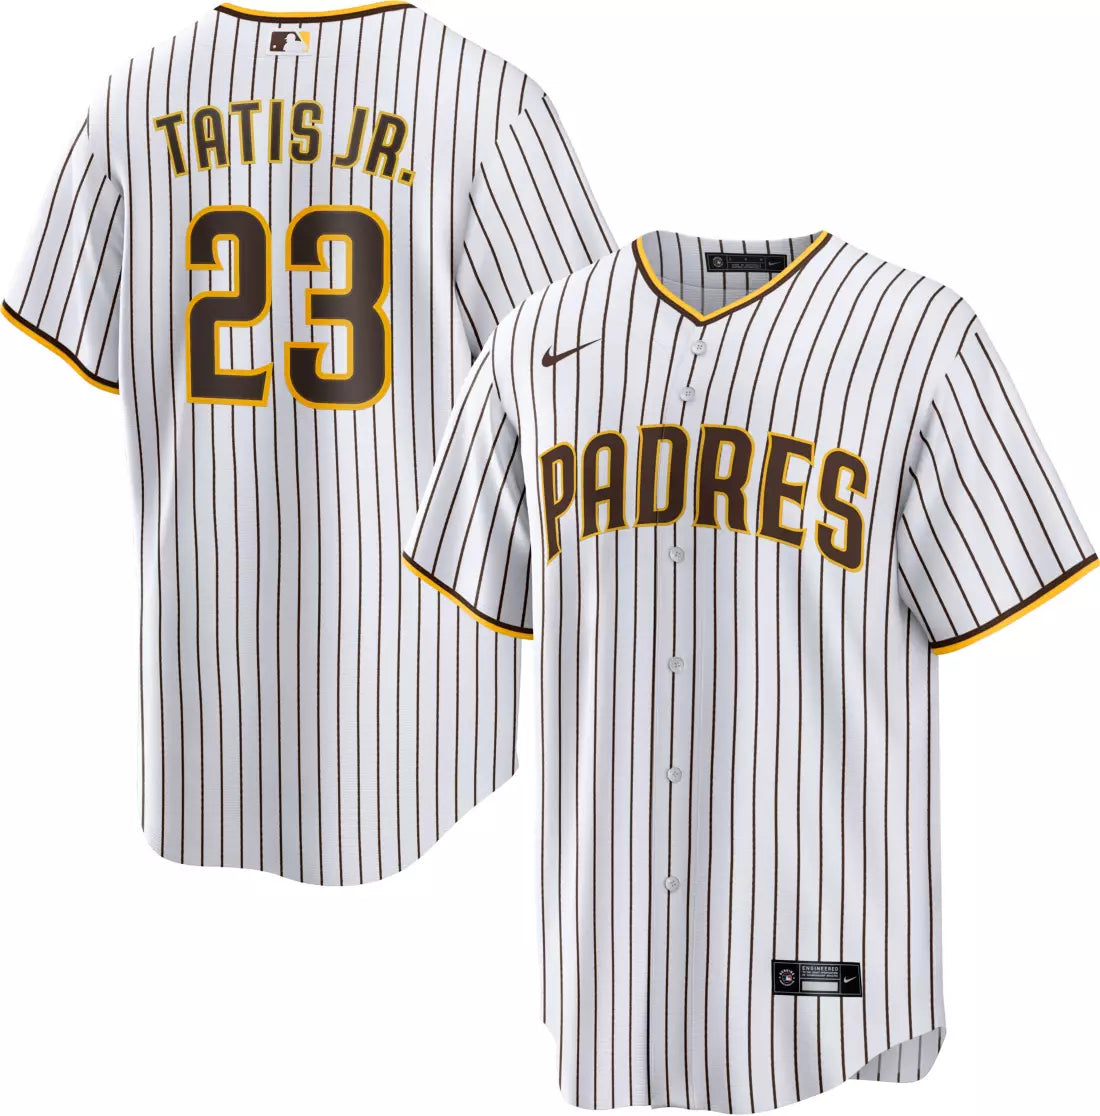 San Diego Padres jersey